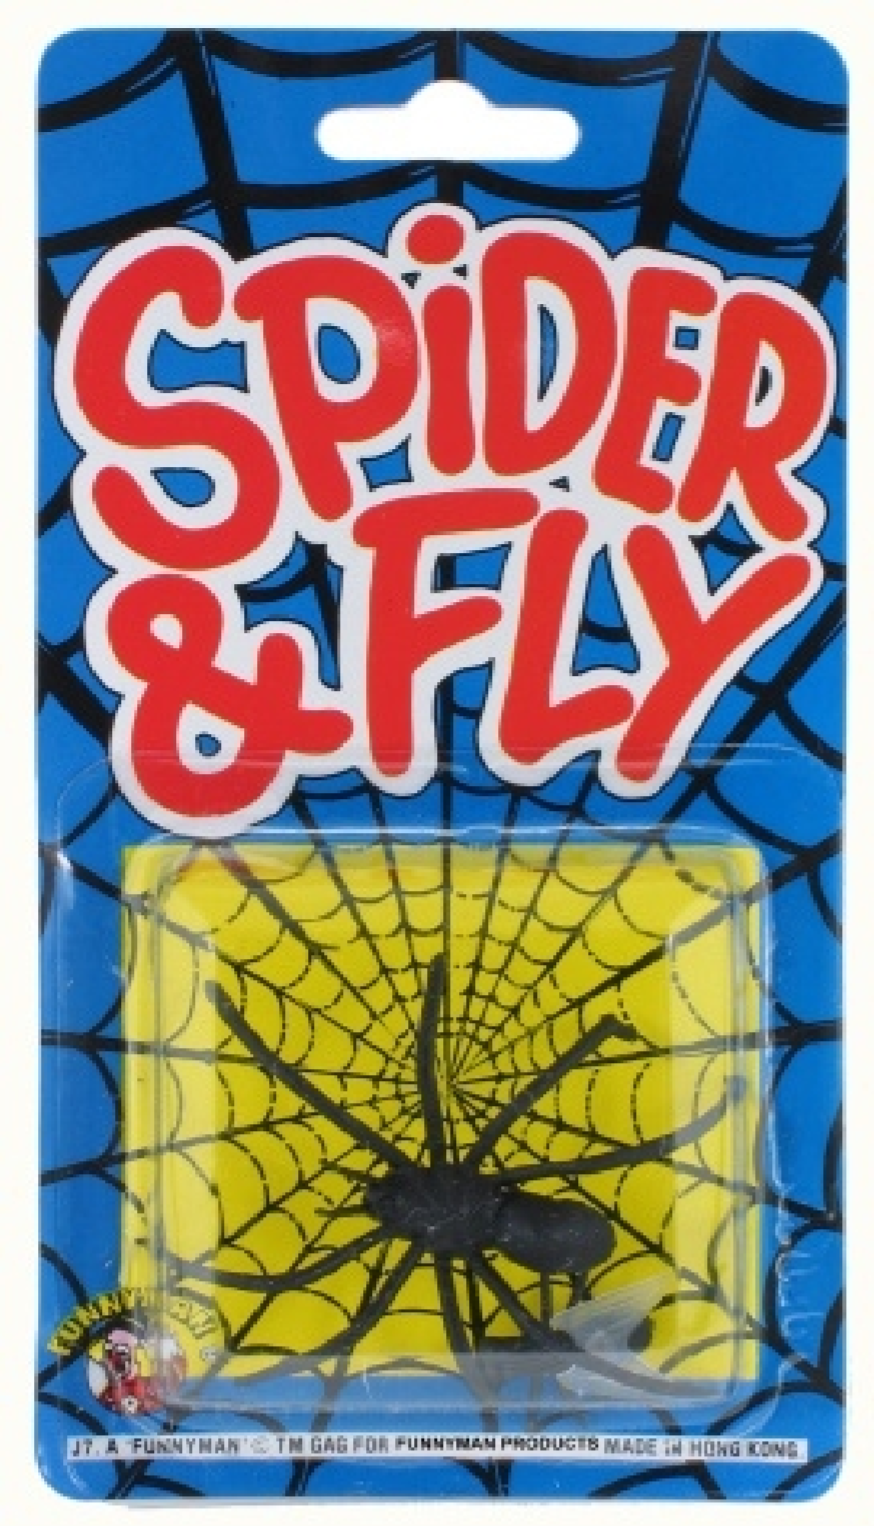 SPIDER & FLY PRACTICAL JOKE